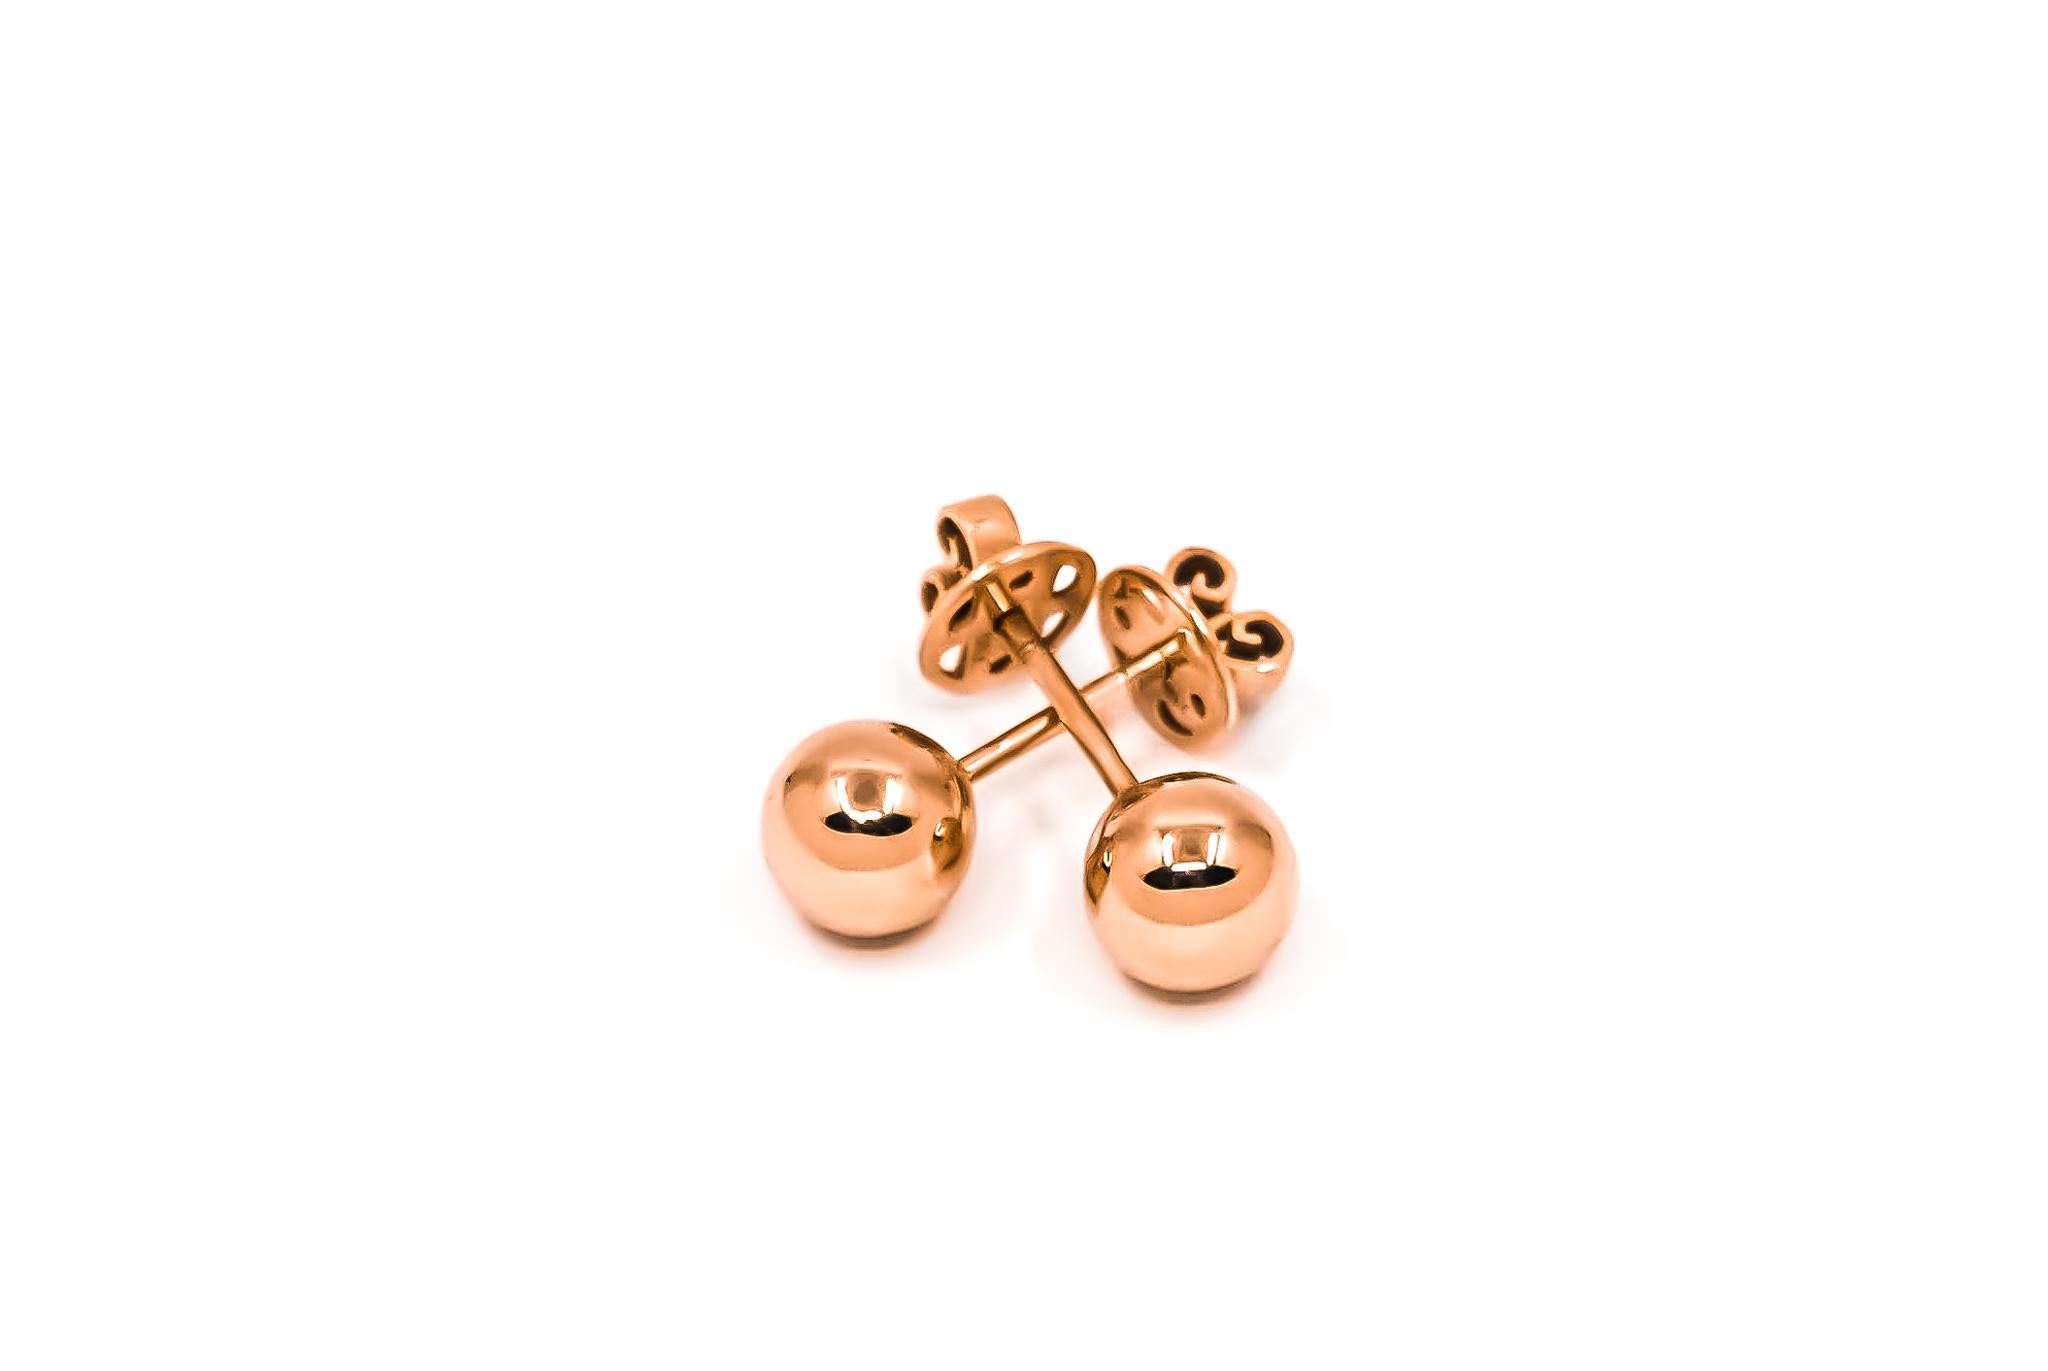 Ball Stud Earrings in 18kt Rose Gold

Ball size -  7mm